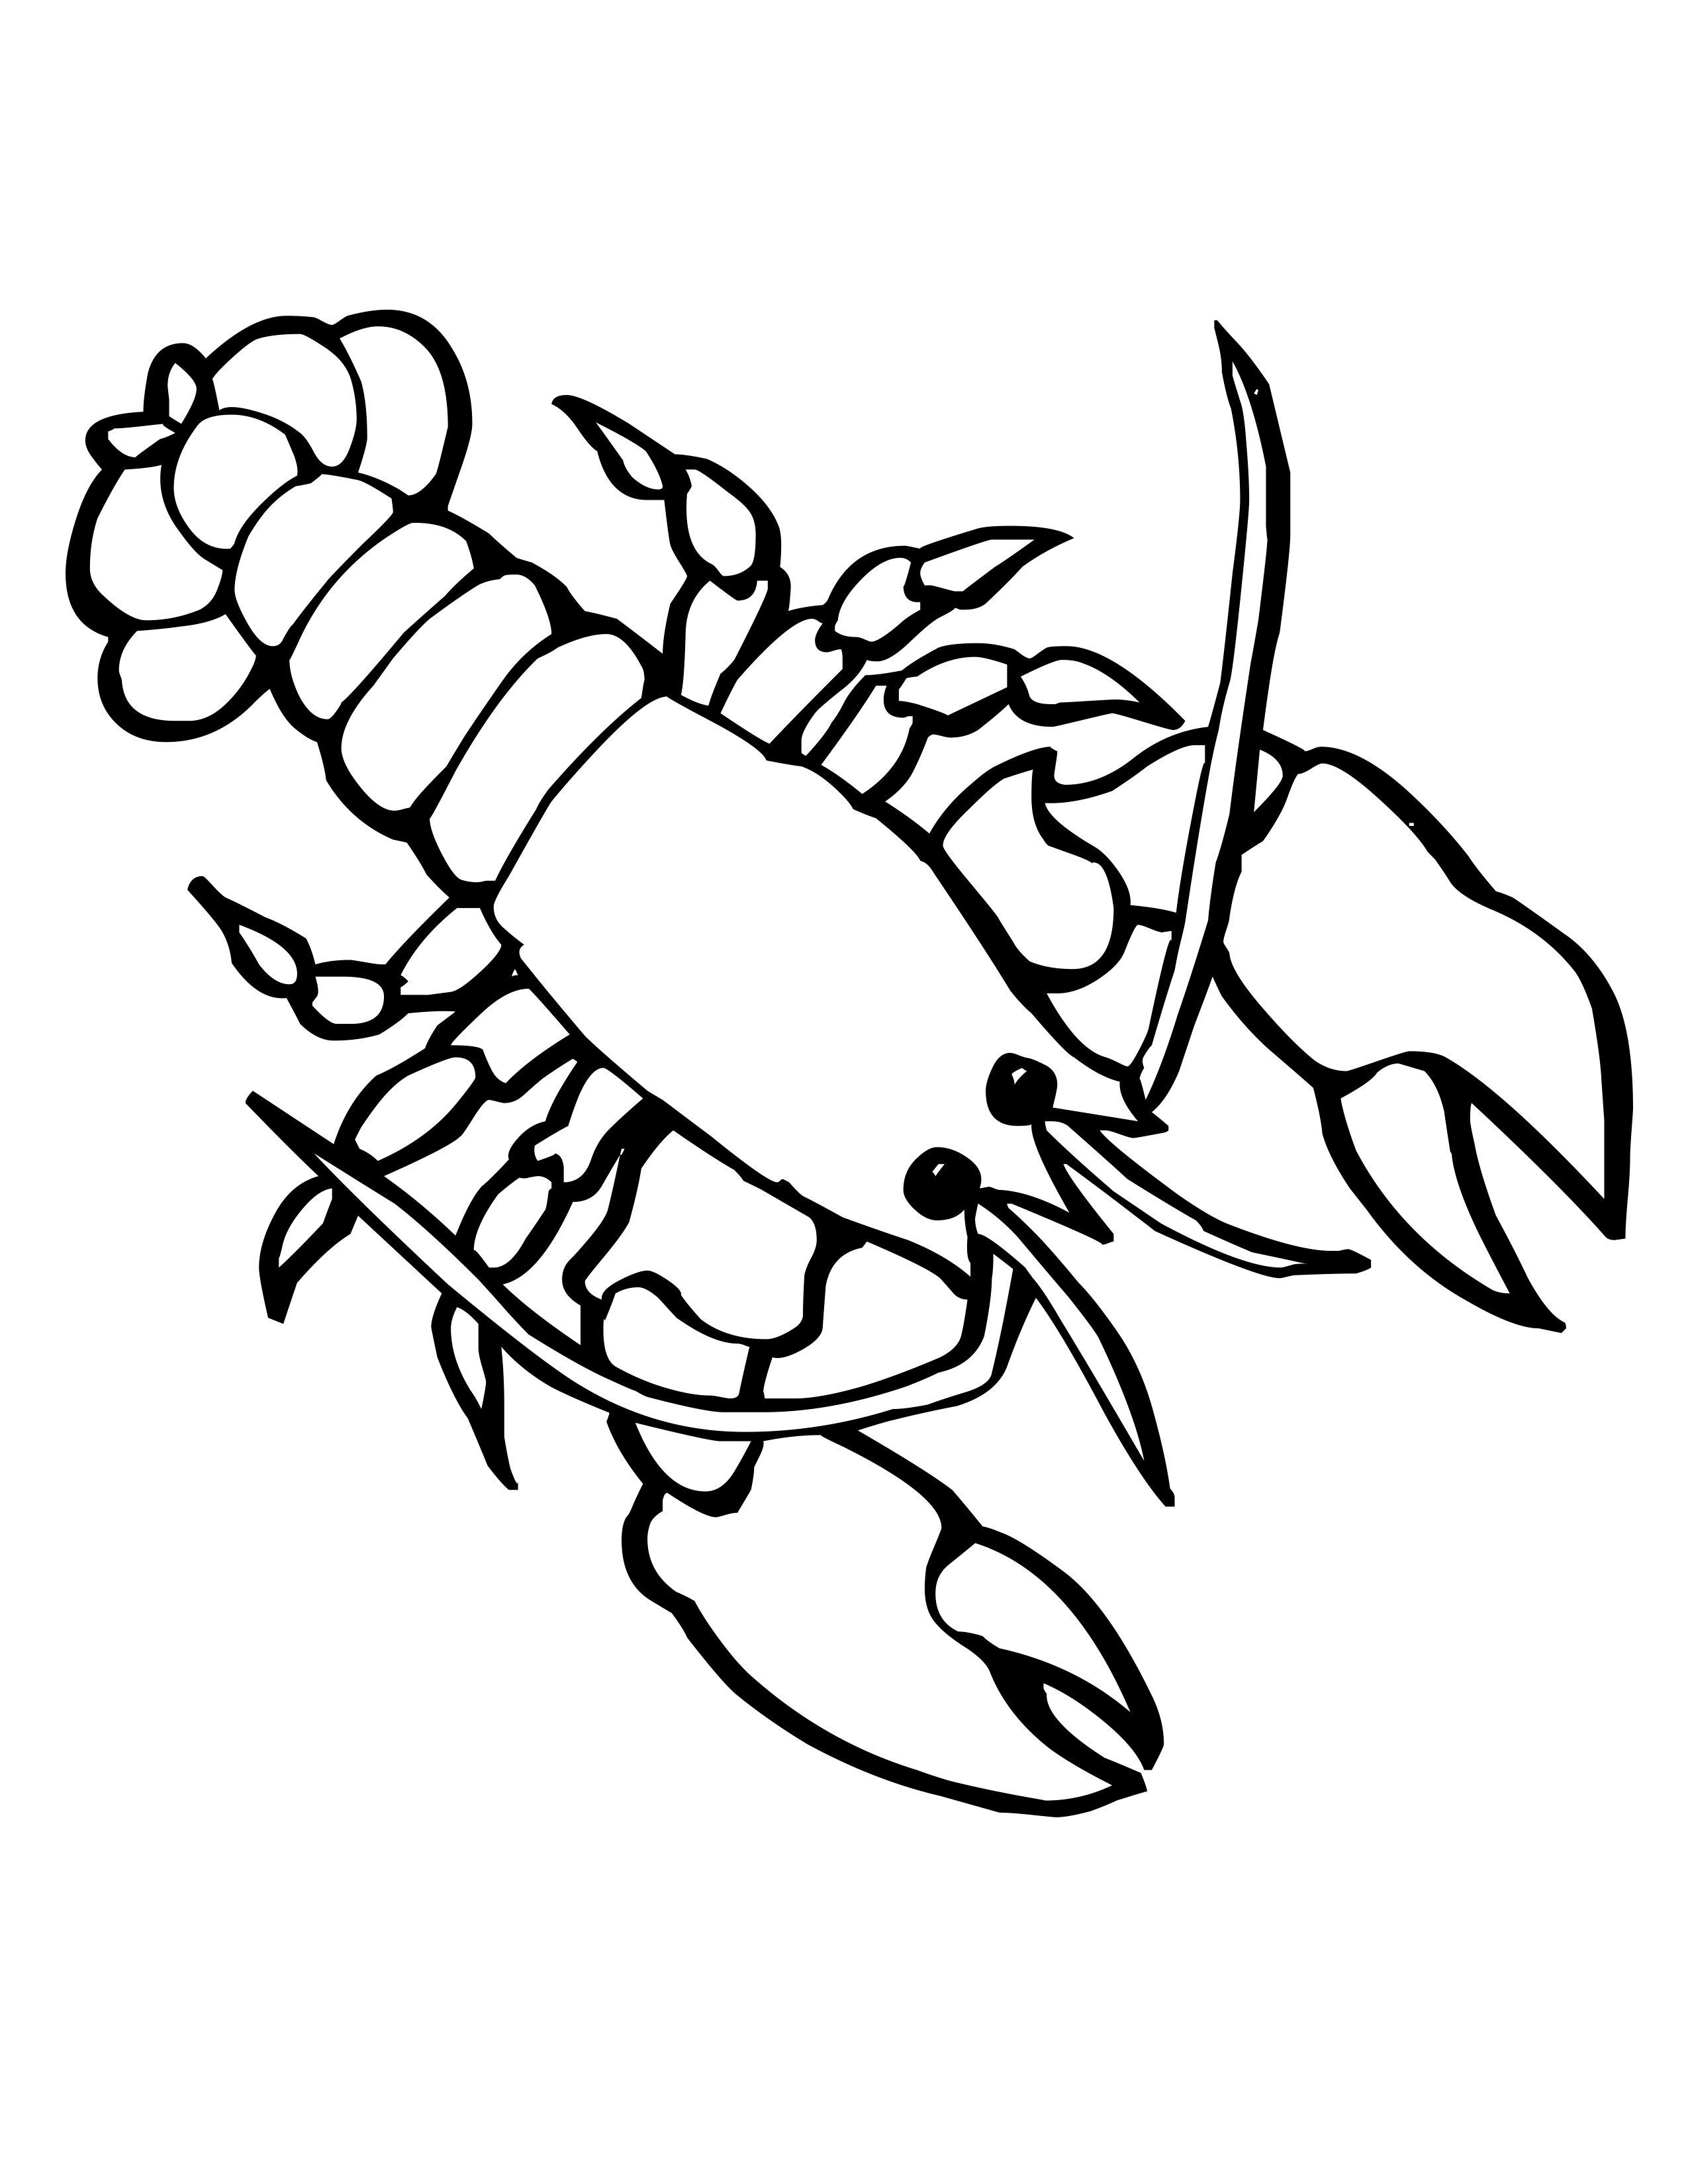 Lobster Line Drawing at GetDrawings | Free download